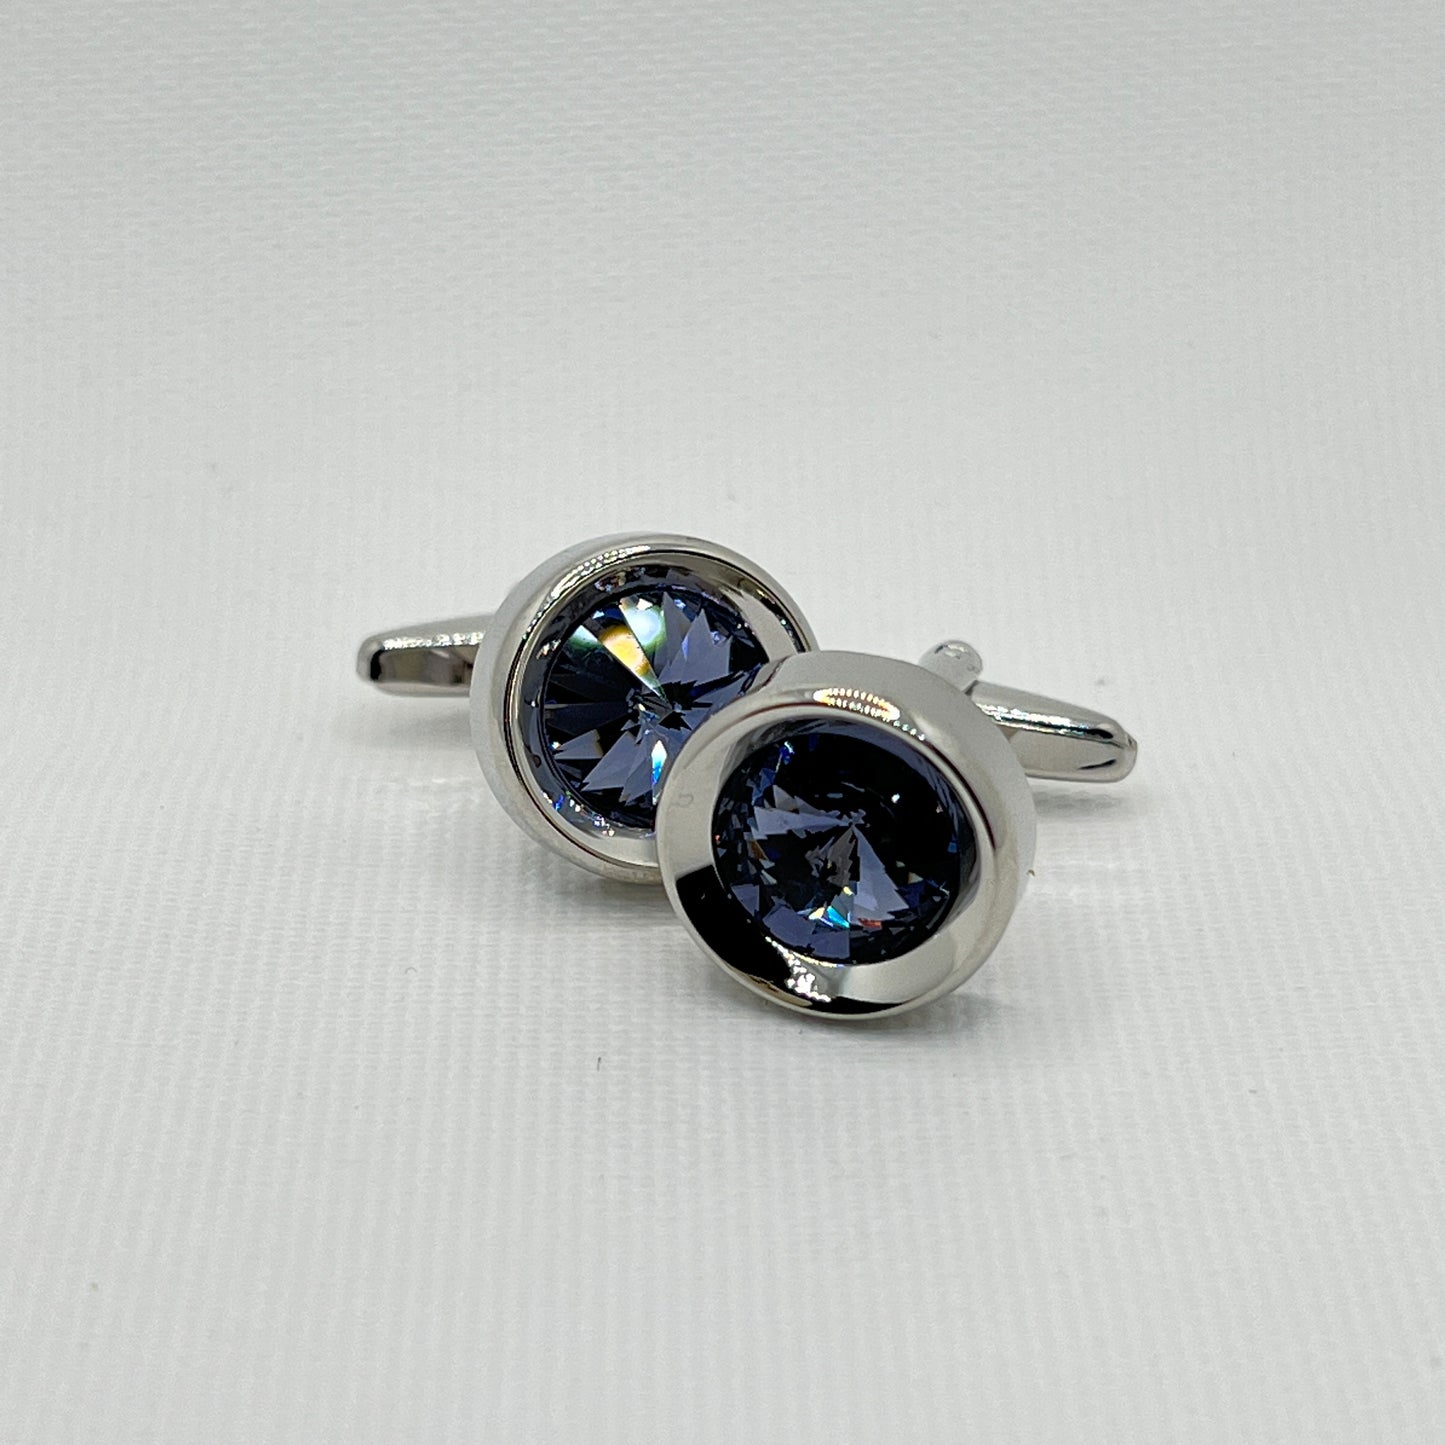 Tasker & Shaw | Luxury Menswear | Round silver cufflinks with blue crystal